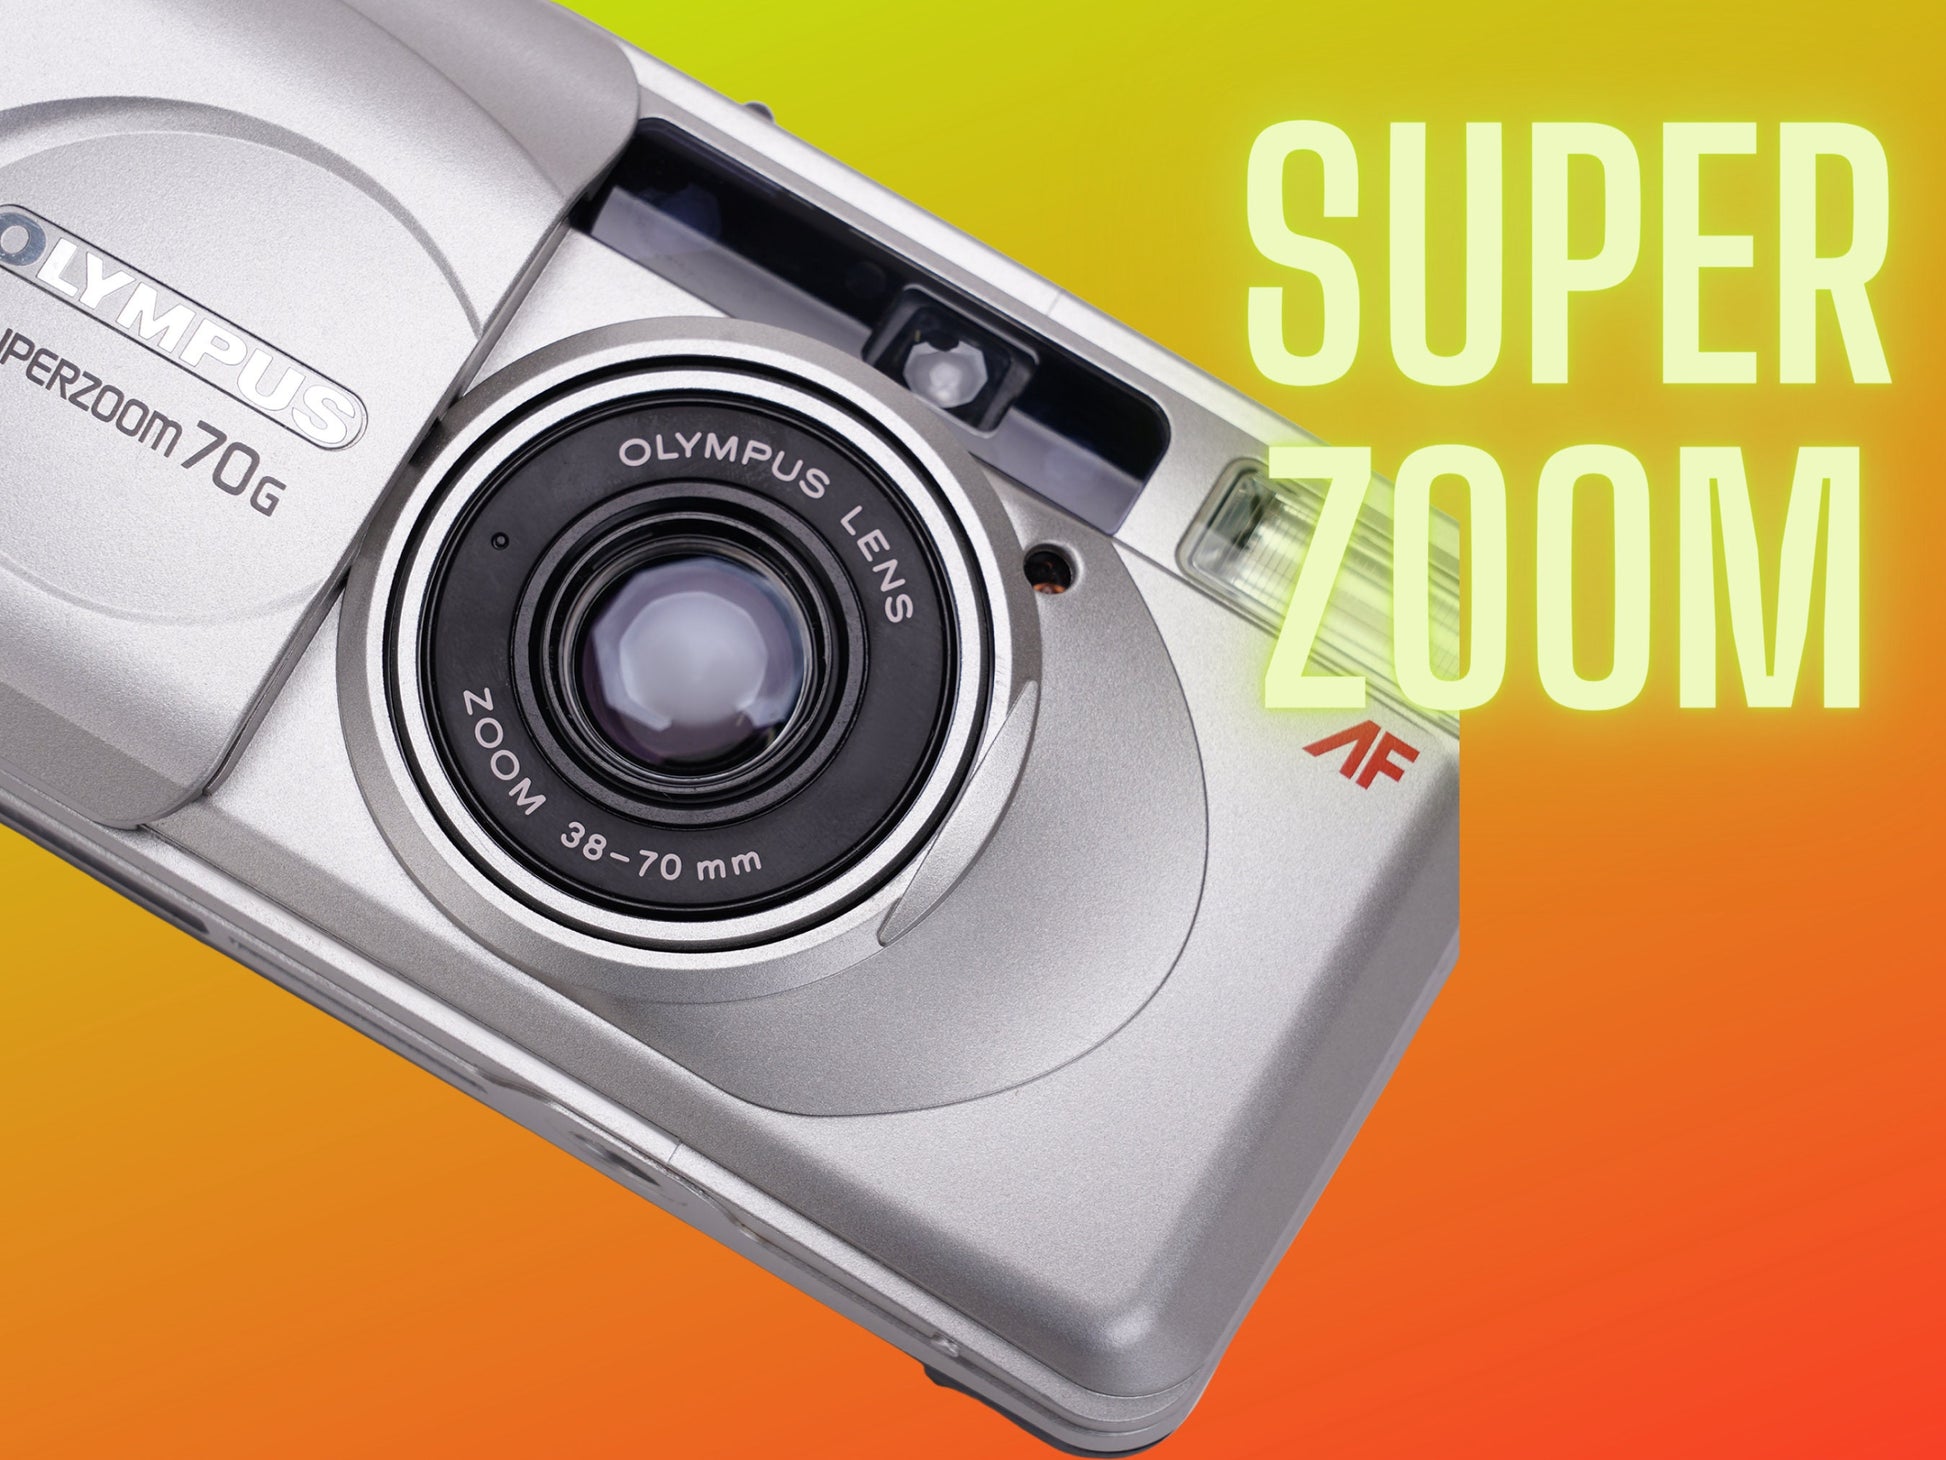 NEW ARRIVAL!! Olympus Superzoom 70G, Working Film Camera, Vintage Camera - Vintage Polaroid Instant Cameras